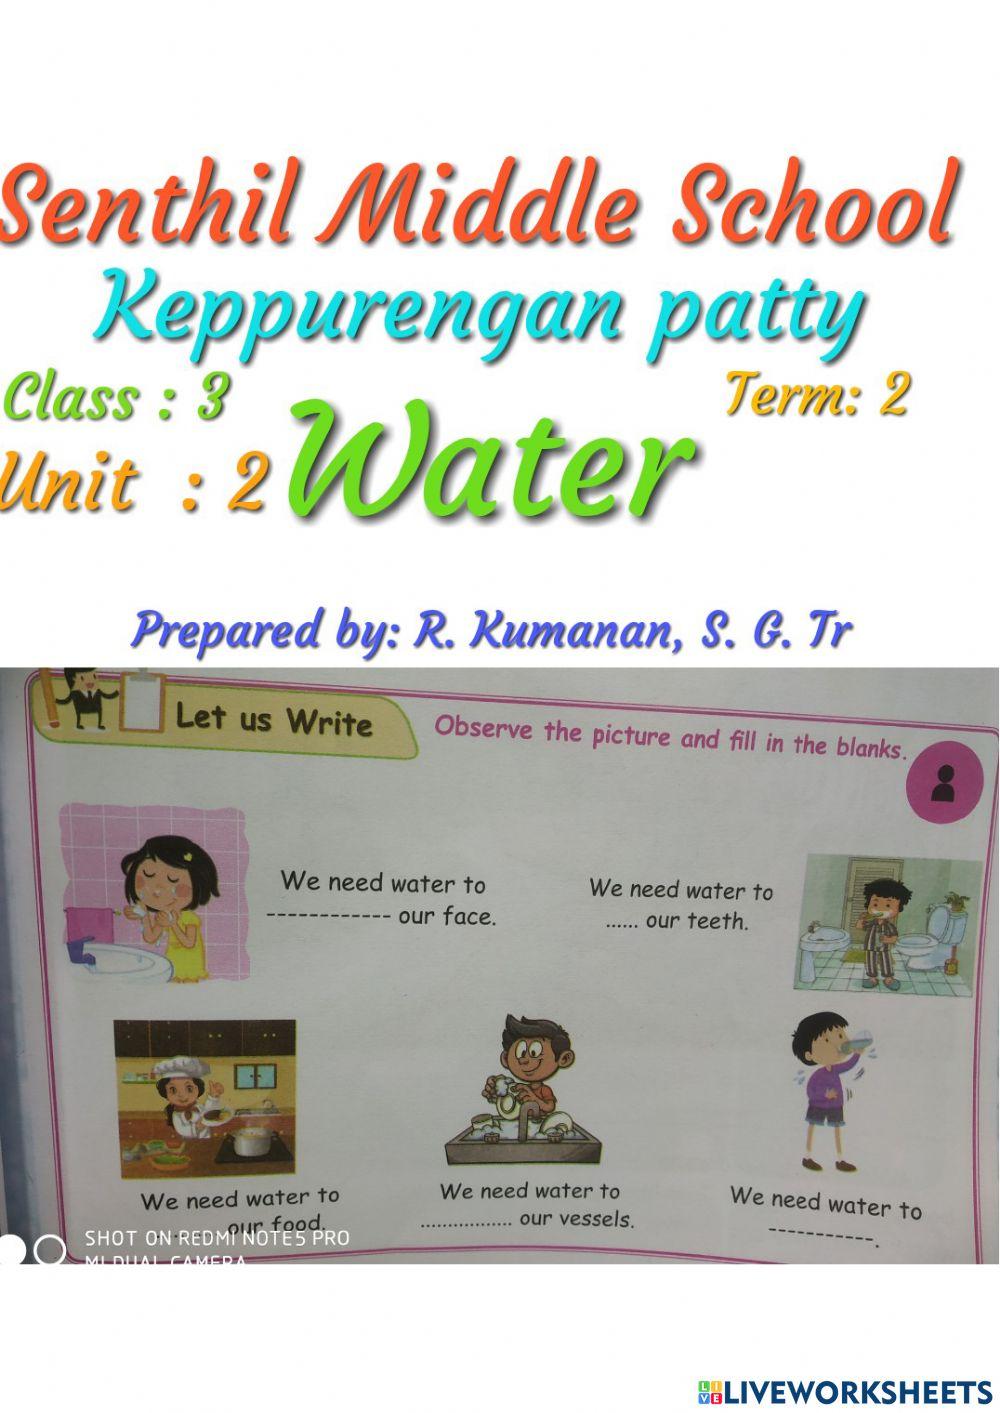 2 nd TERM- CLASS-3 -SCIENCE- UNIT-2- WATER.PREPARED BY - R.KUMANAN,SENTHIL MIDDLE SCHOOL, KEPPURENGAN PATTY.